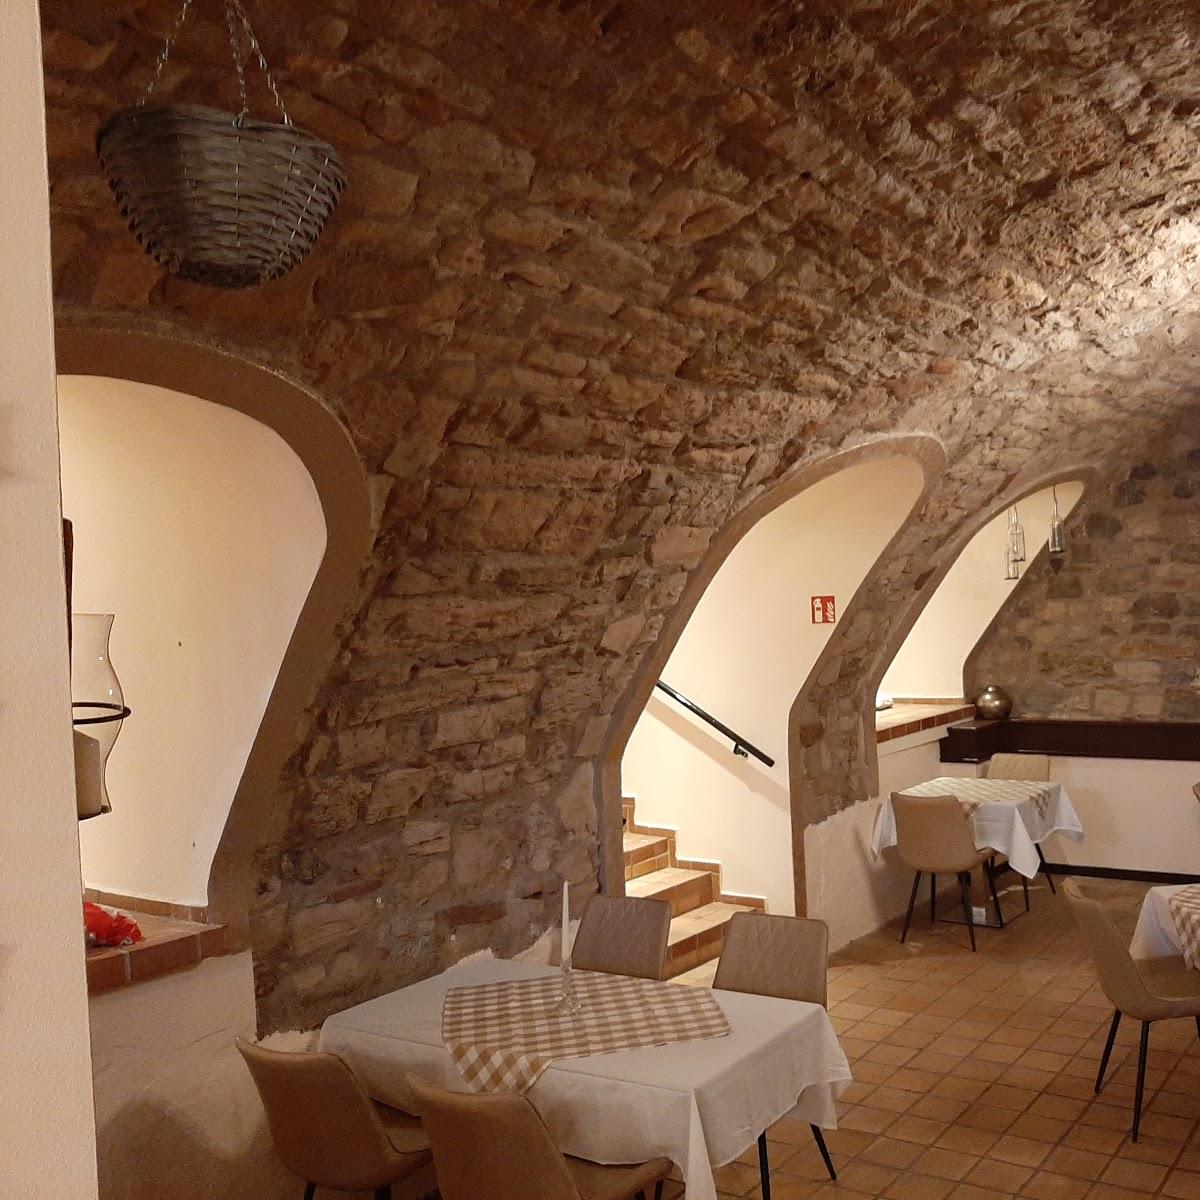 Restaurant "La Grotta Italiana" in Bad Wildungen